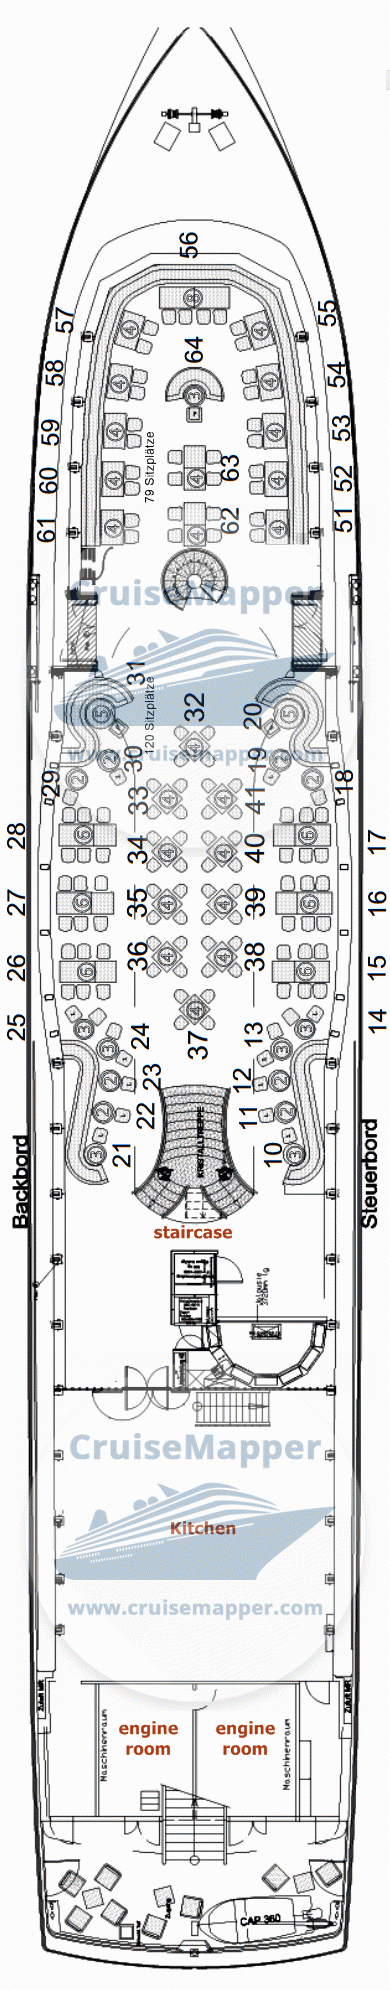 MS Kristallkonigin Deck 01 - Main-Hauptdeck